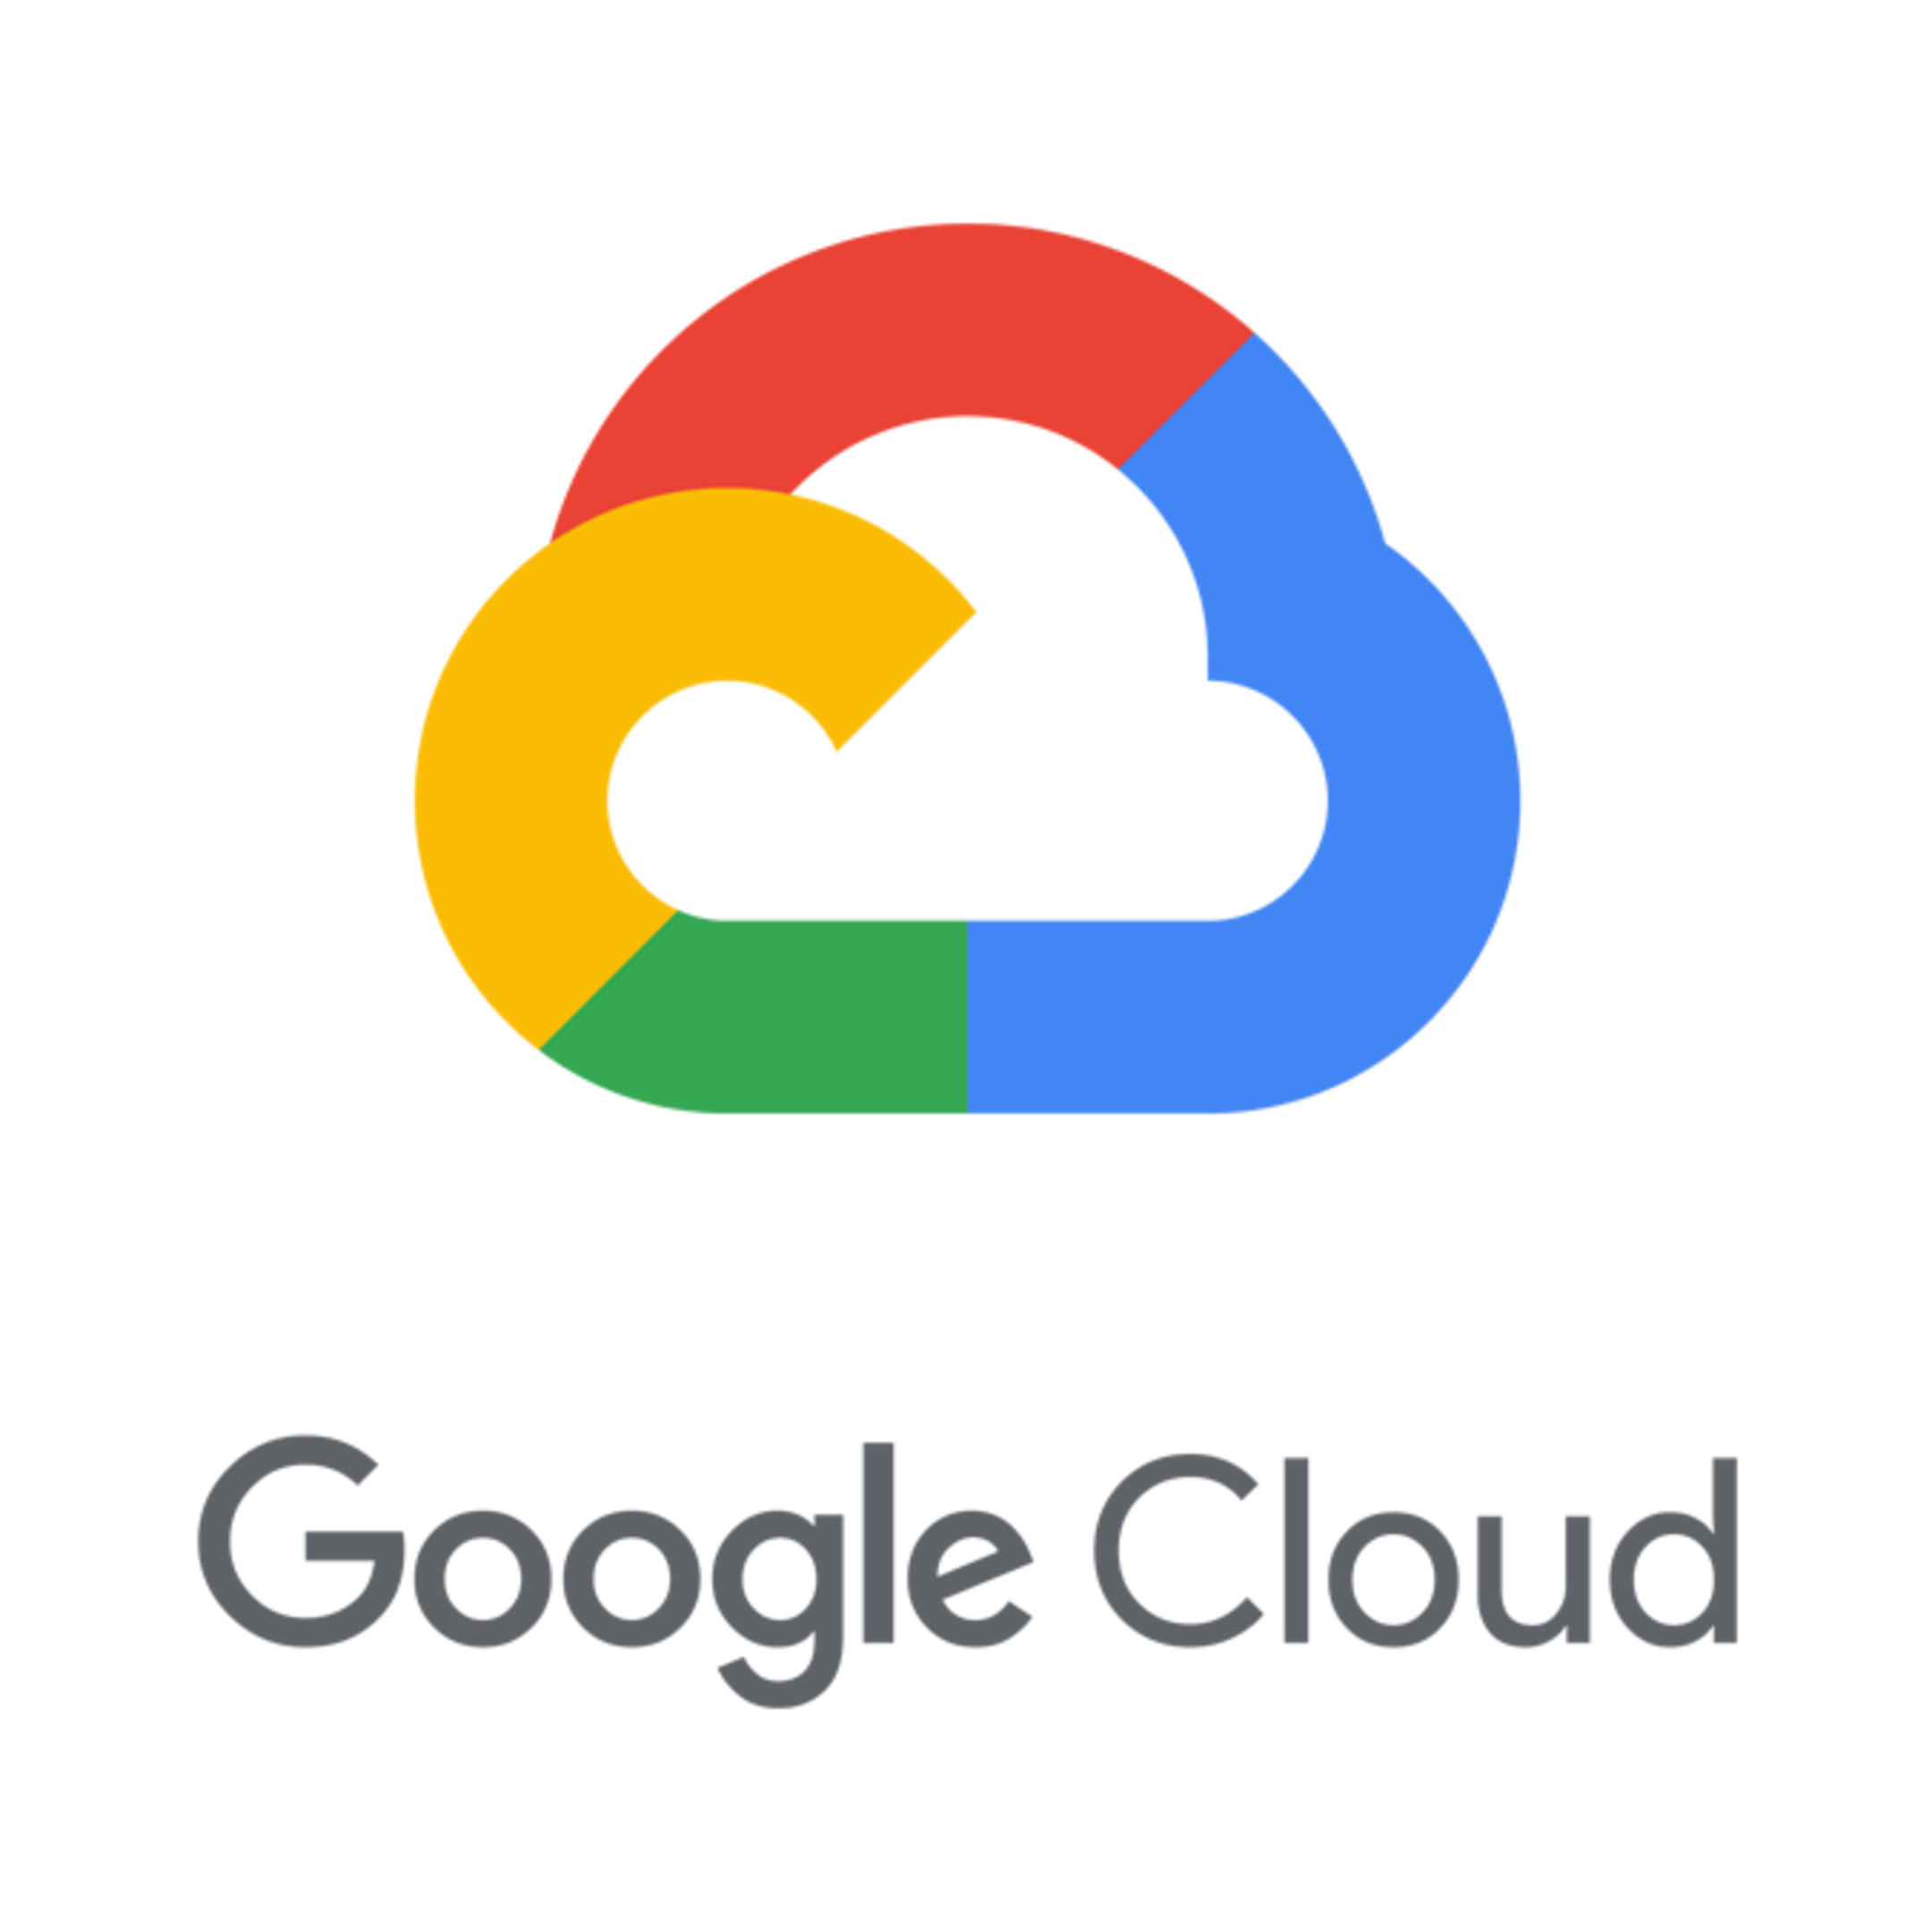 Google Cloud Logo PNG File